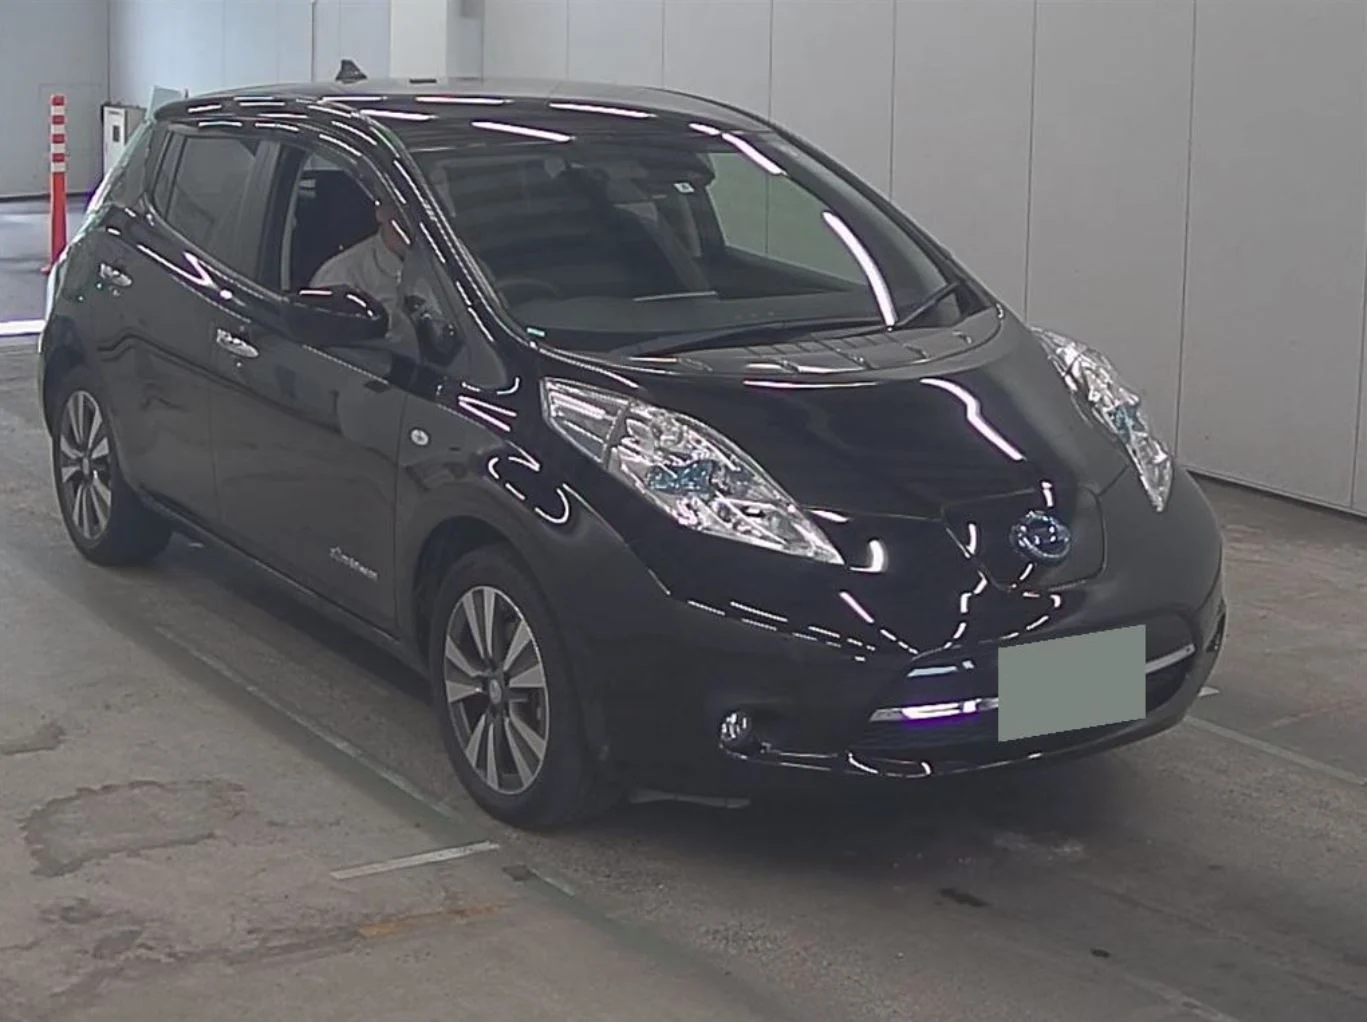 2017 Nissan Leaf AZE0 30 kWh exterior